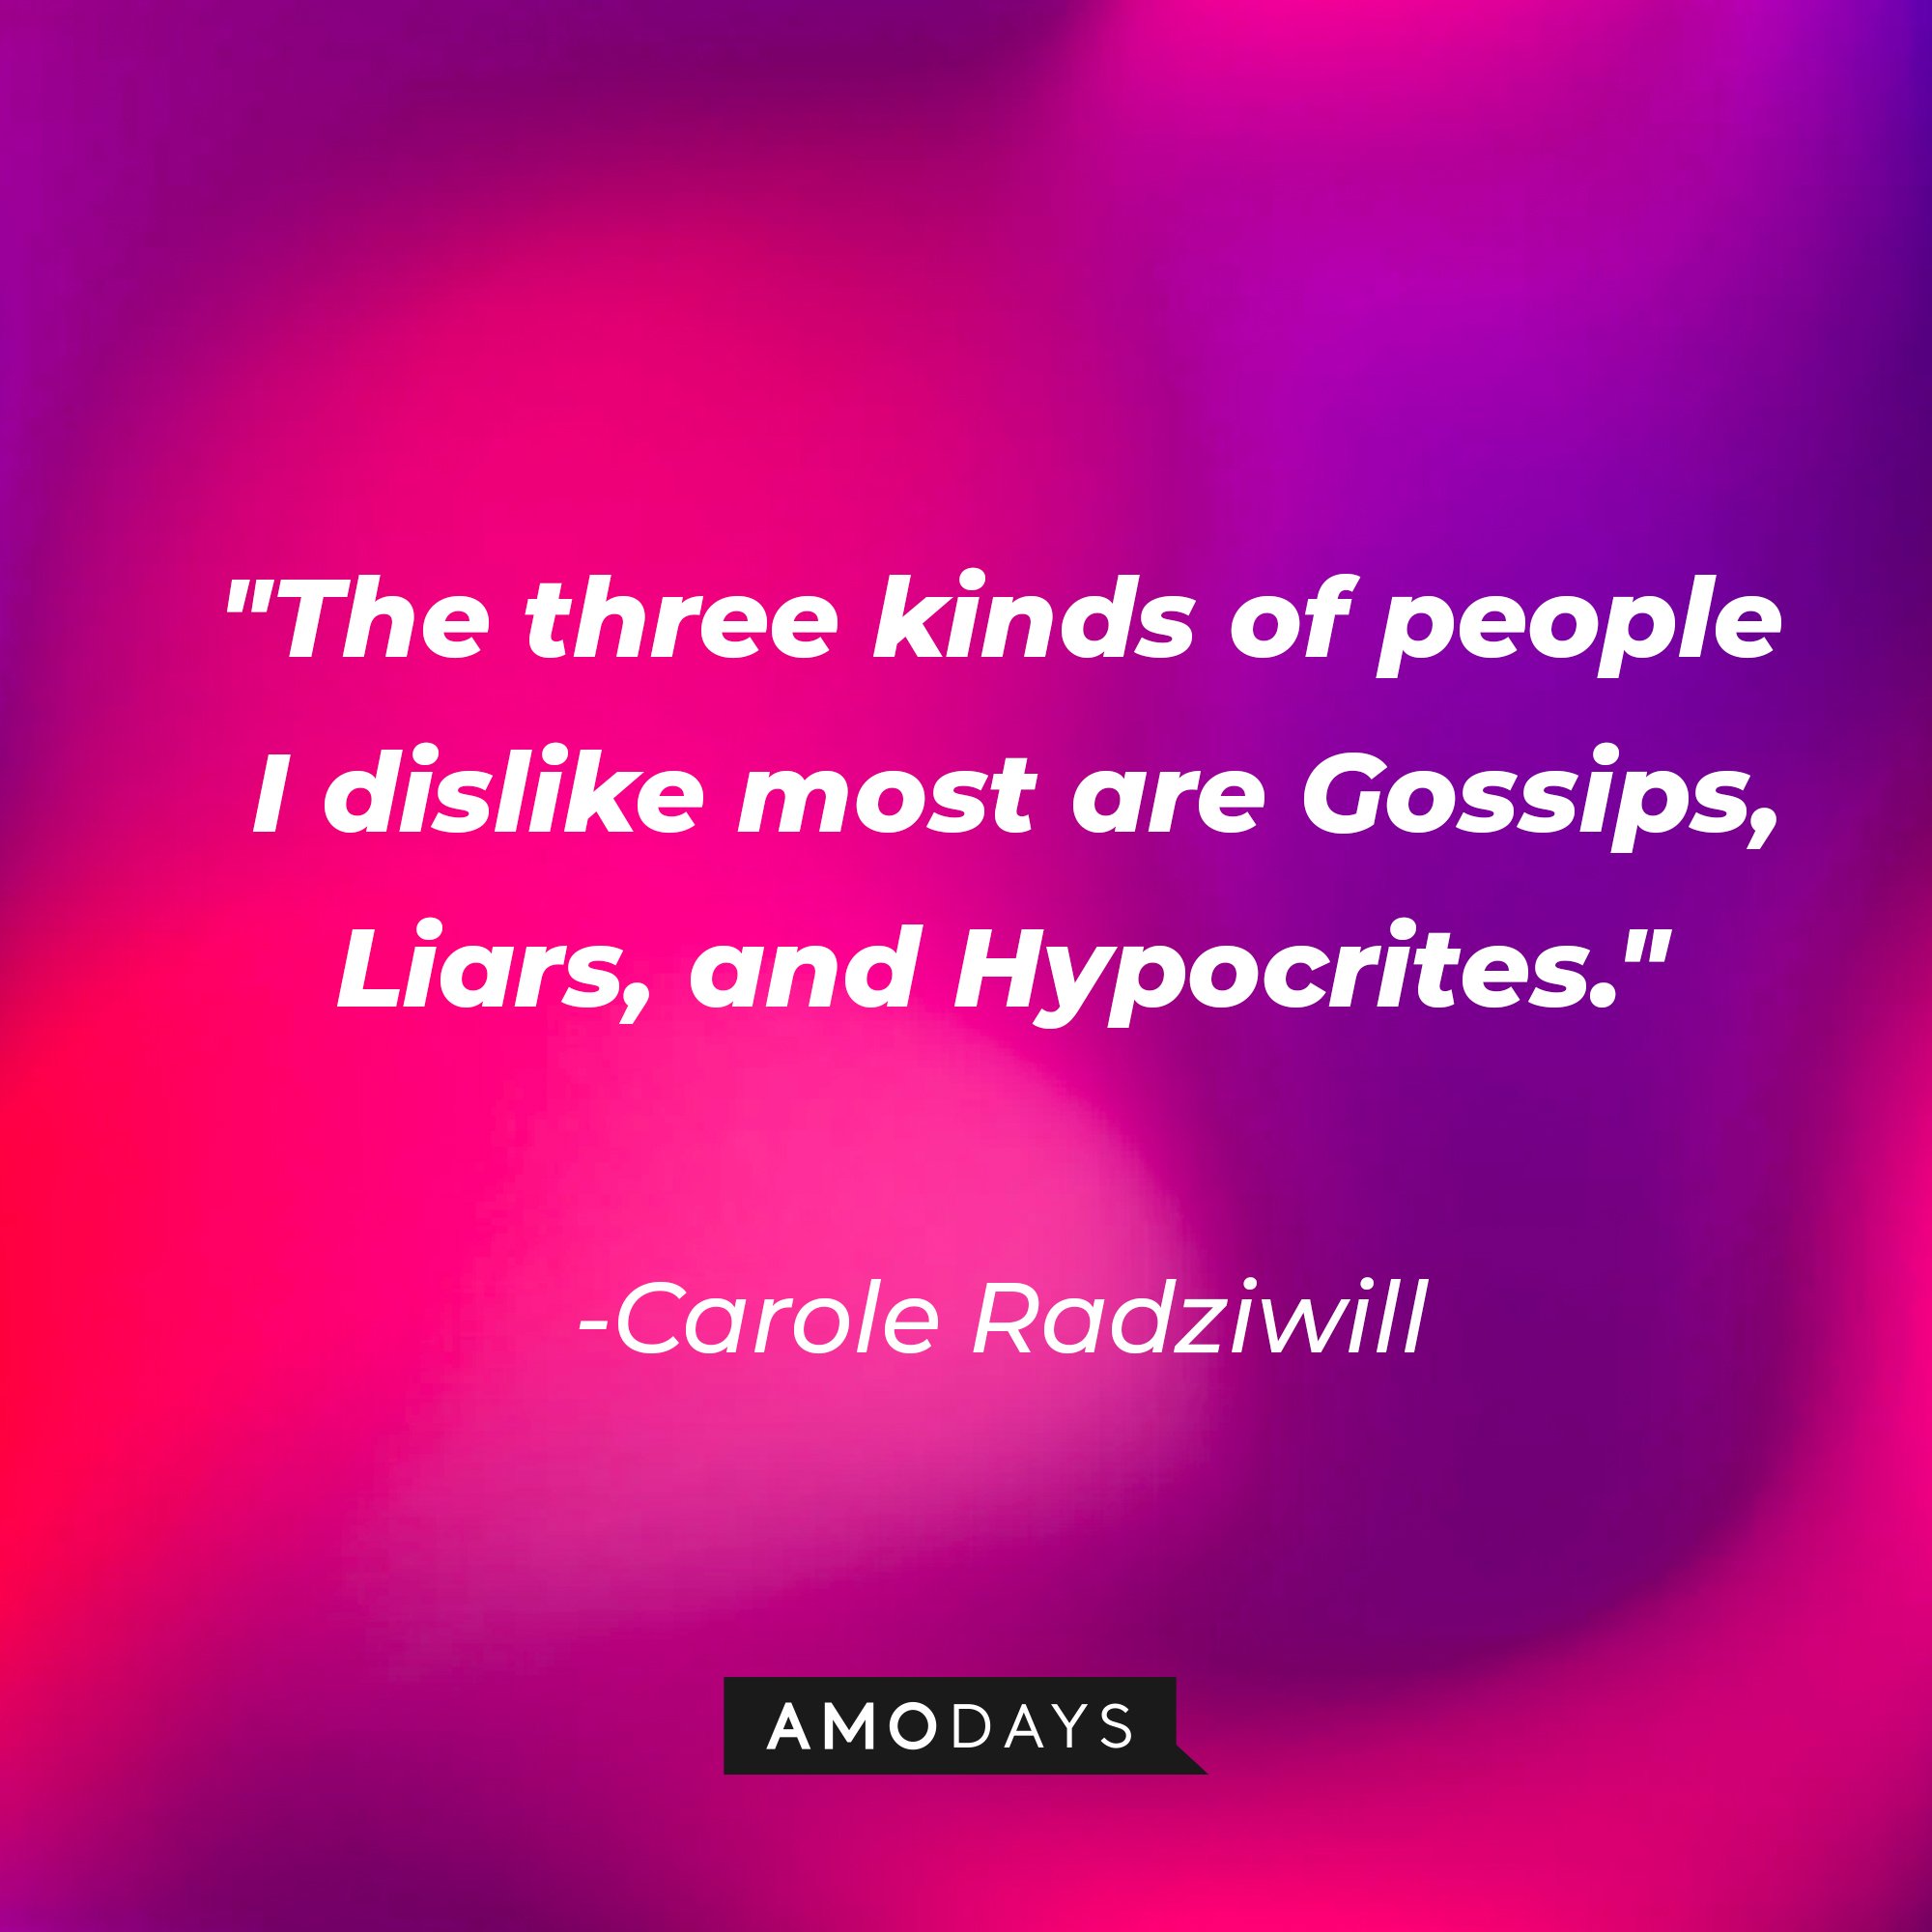 Carole Radziwill's quote:\\\\\\\\\\\\\\\\u00a0"The three kinds of people I dislike most are Gossips, Liars, and Hypocrites."\\\\\\\\\\\\\\\\u00a0| Image: AmoDays